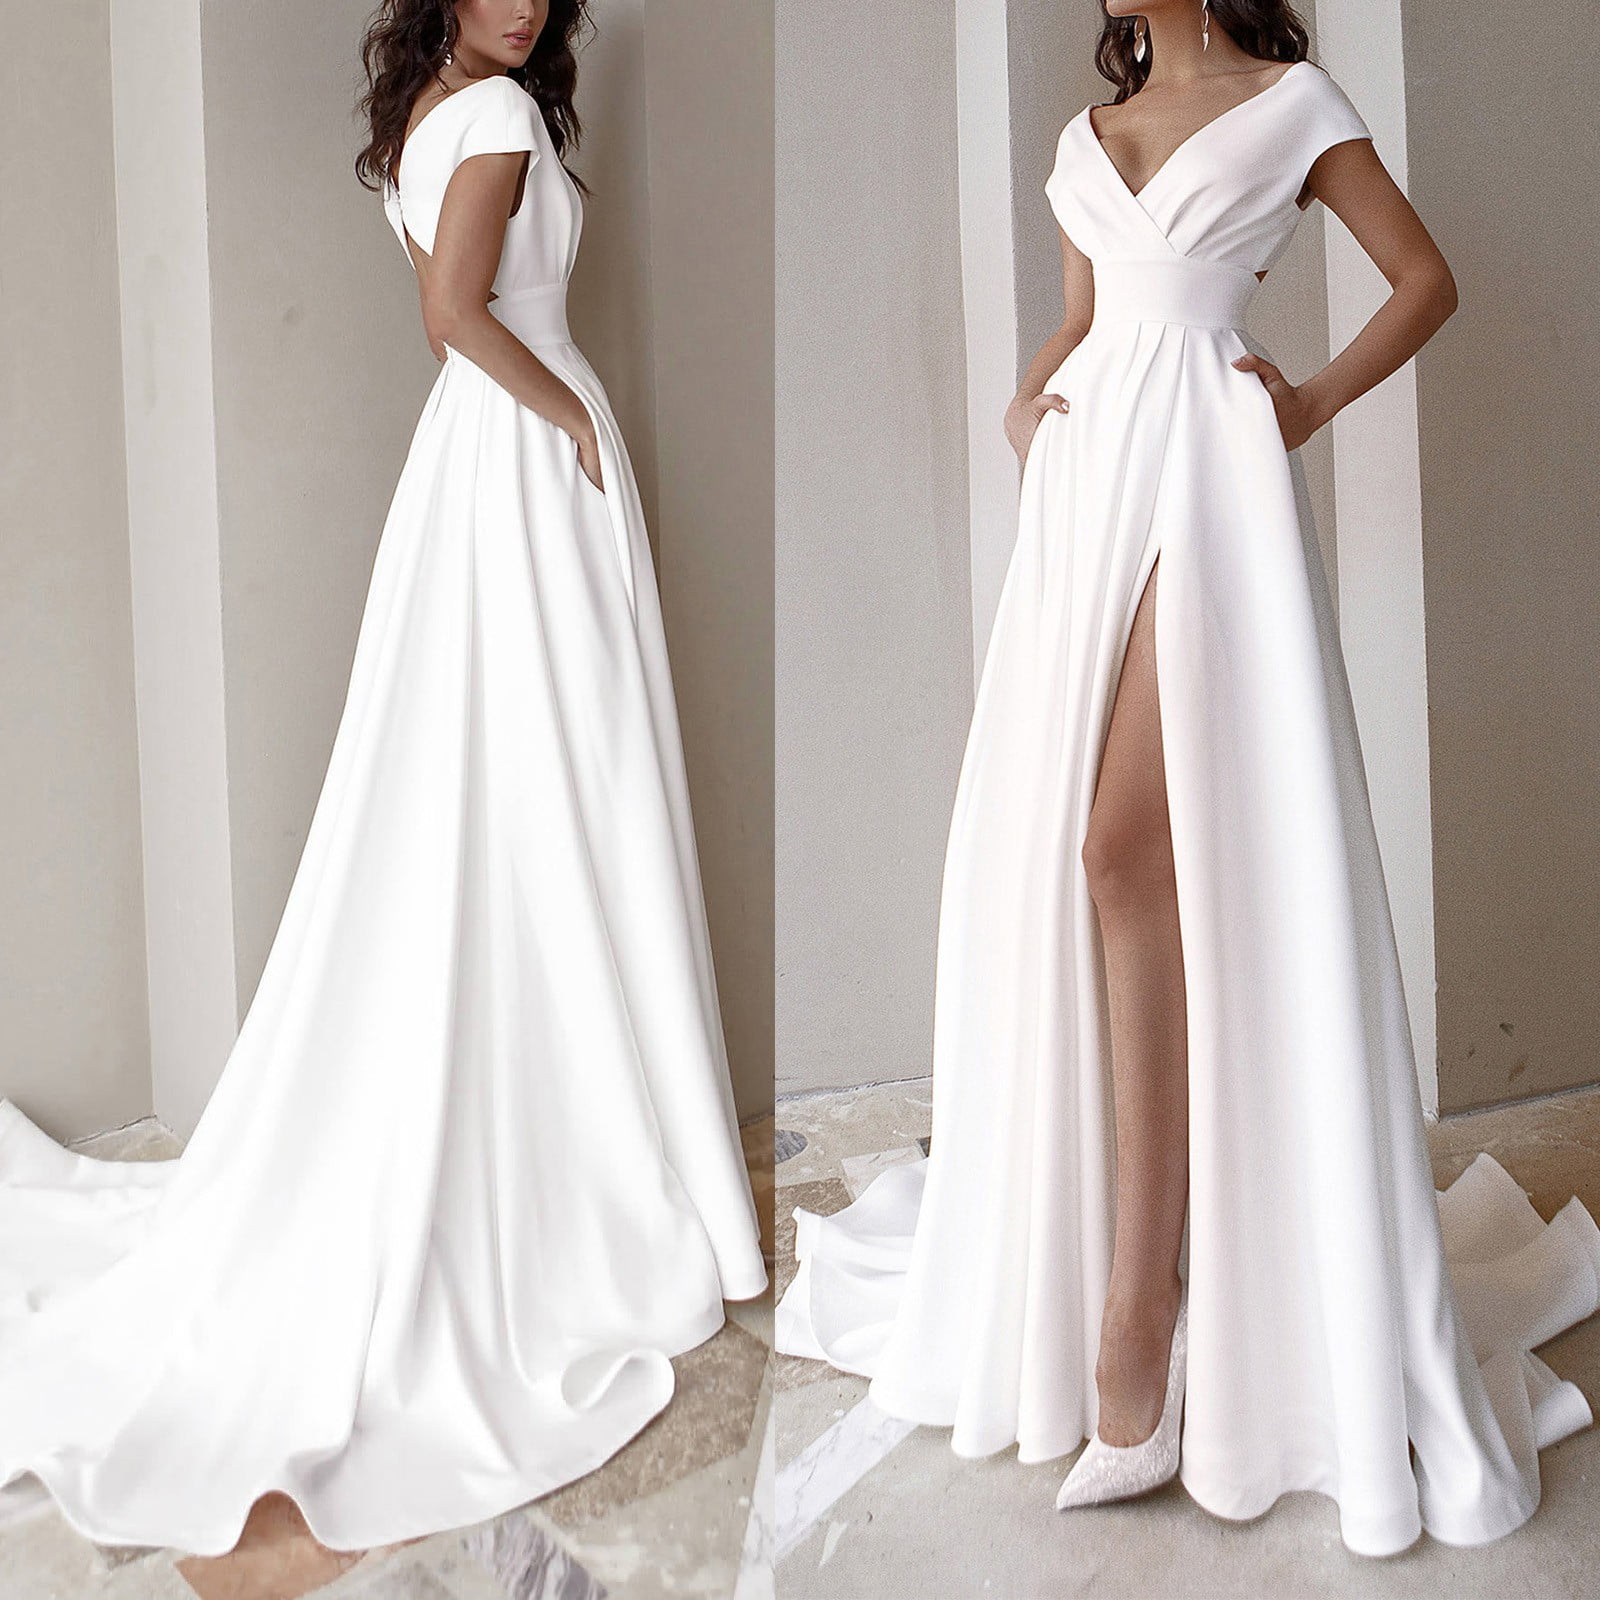 white dress for evening